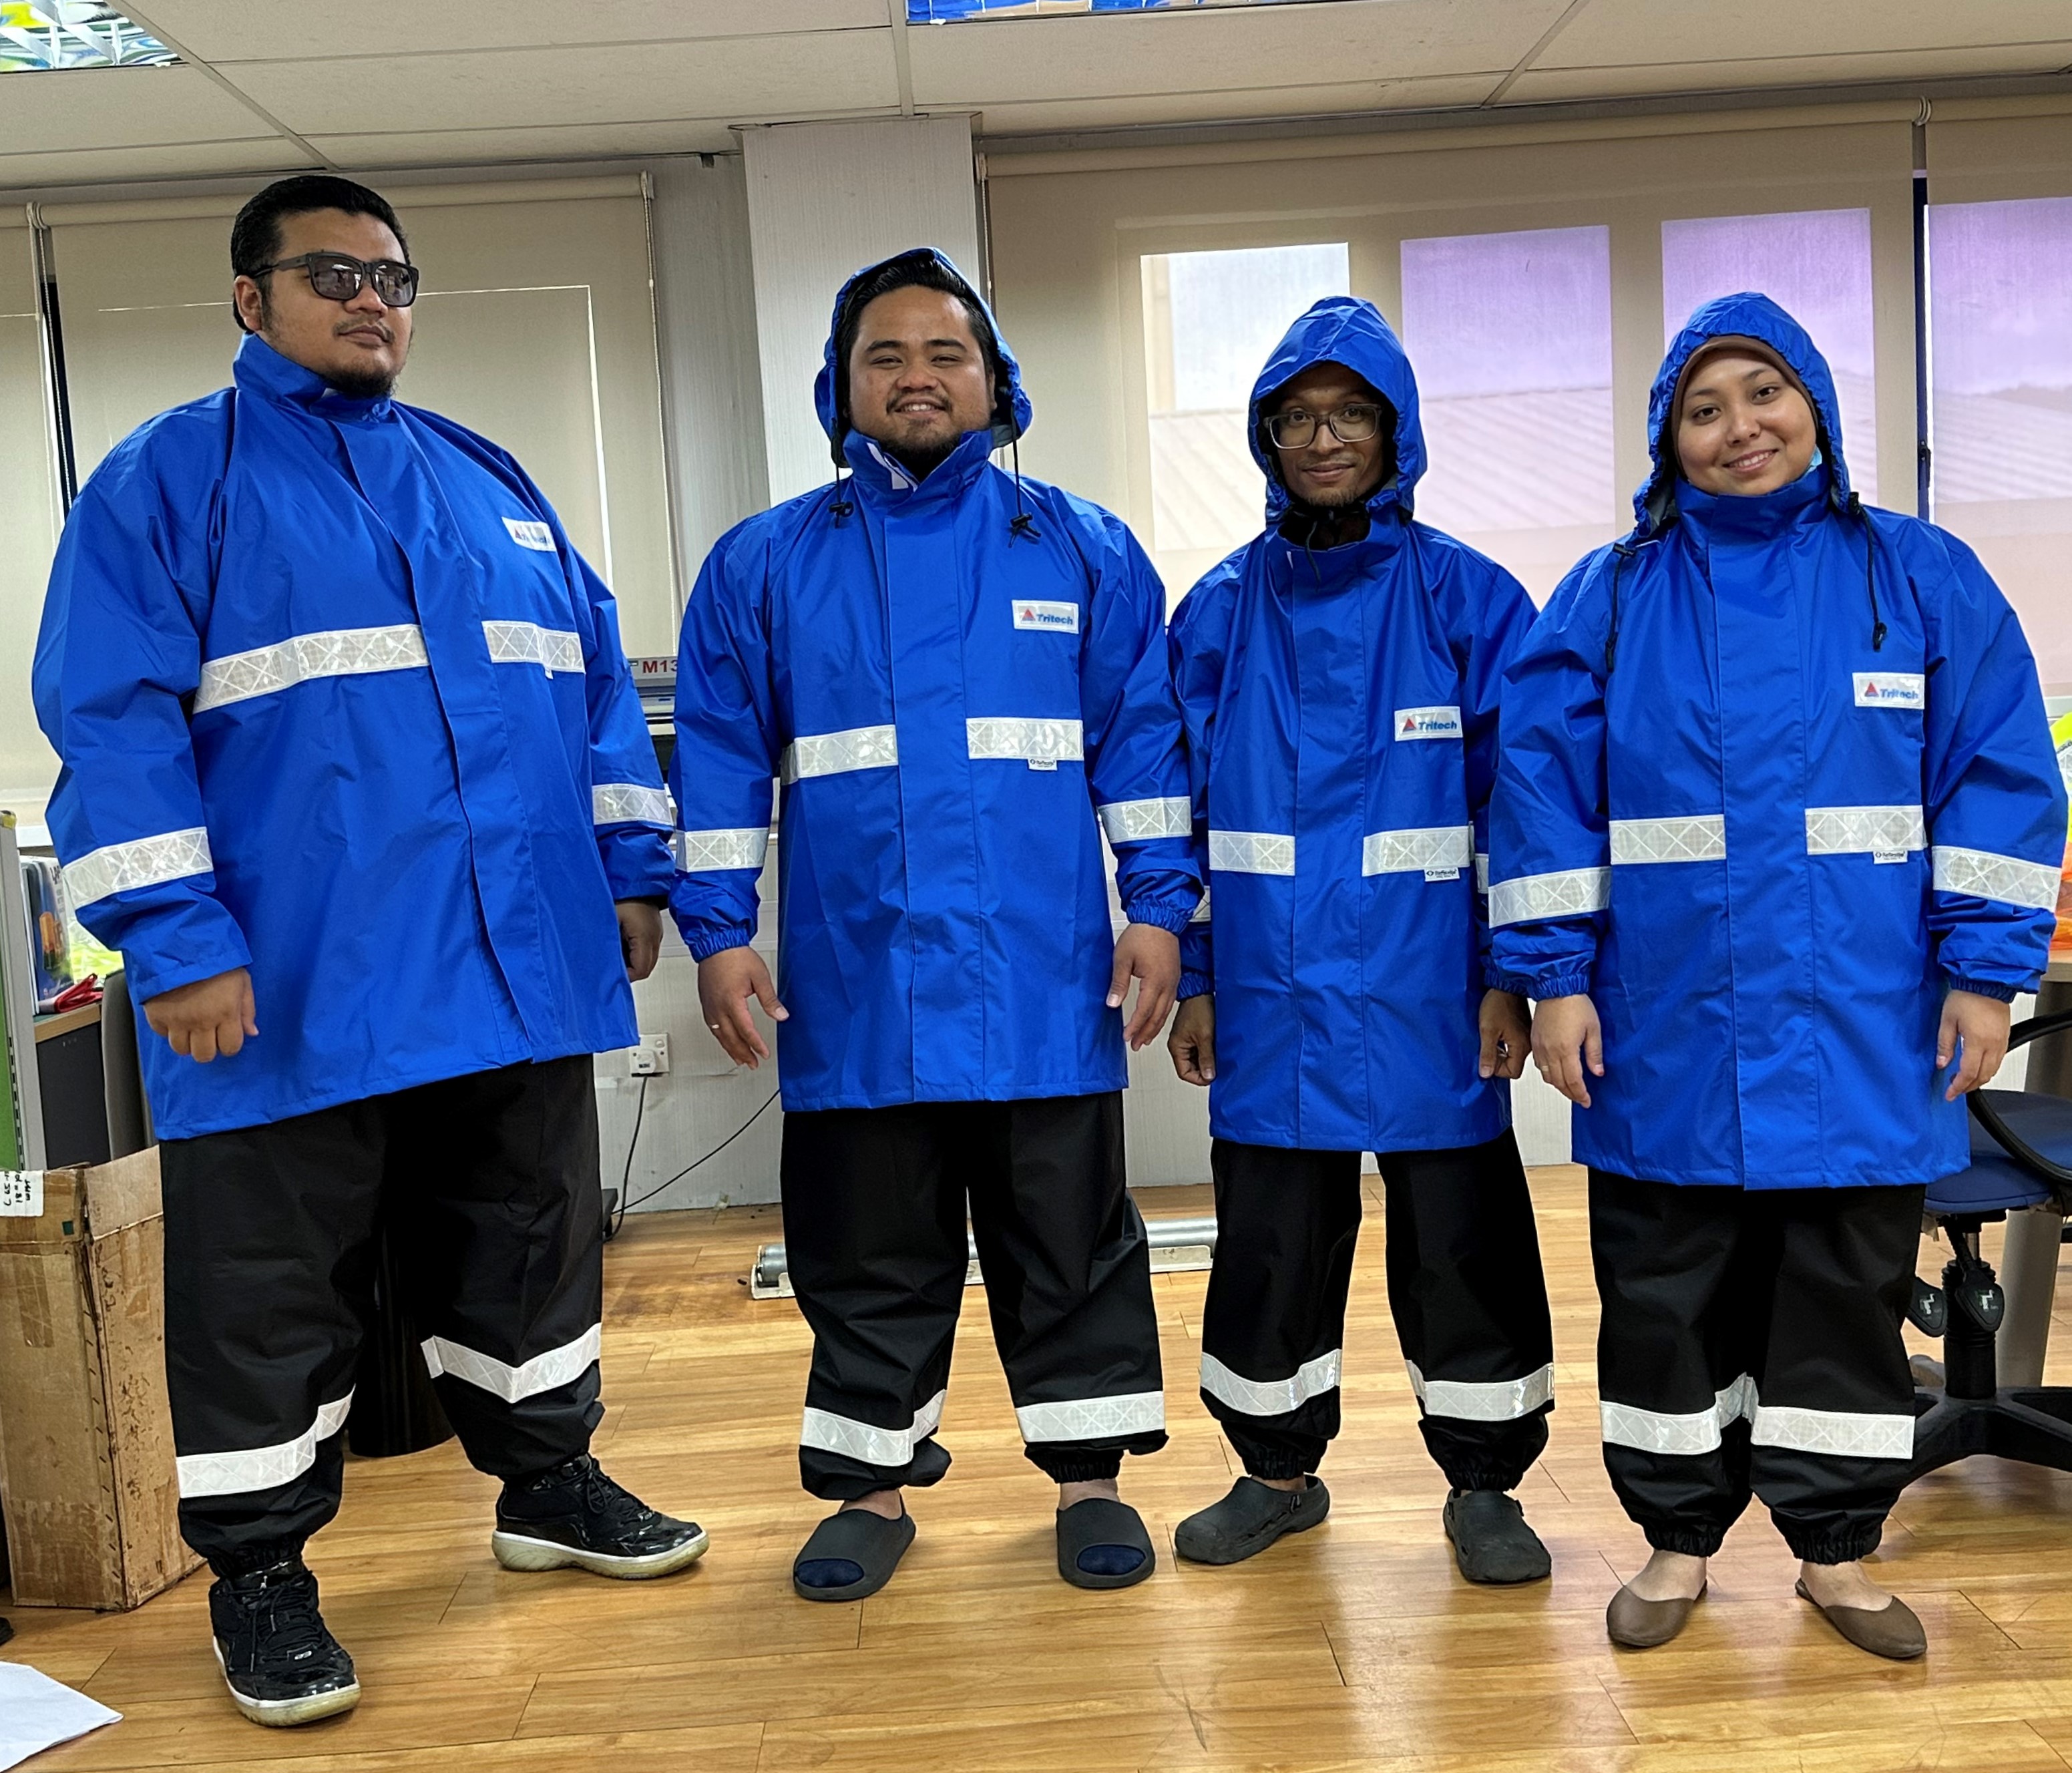 Tritech personnels in reflective raincoat and rainpants